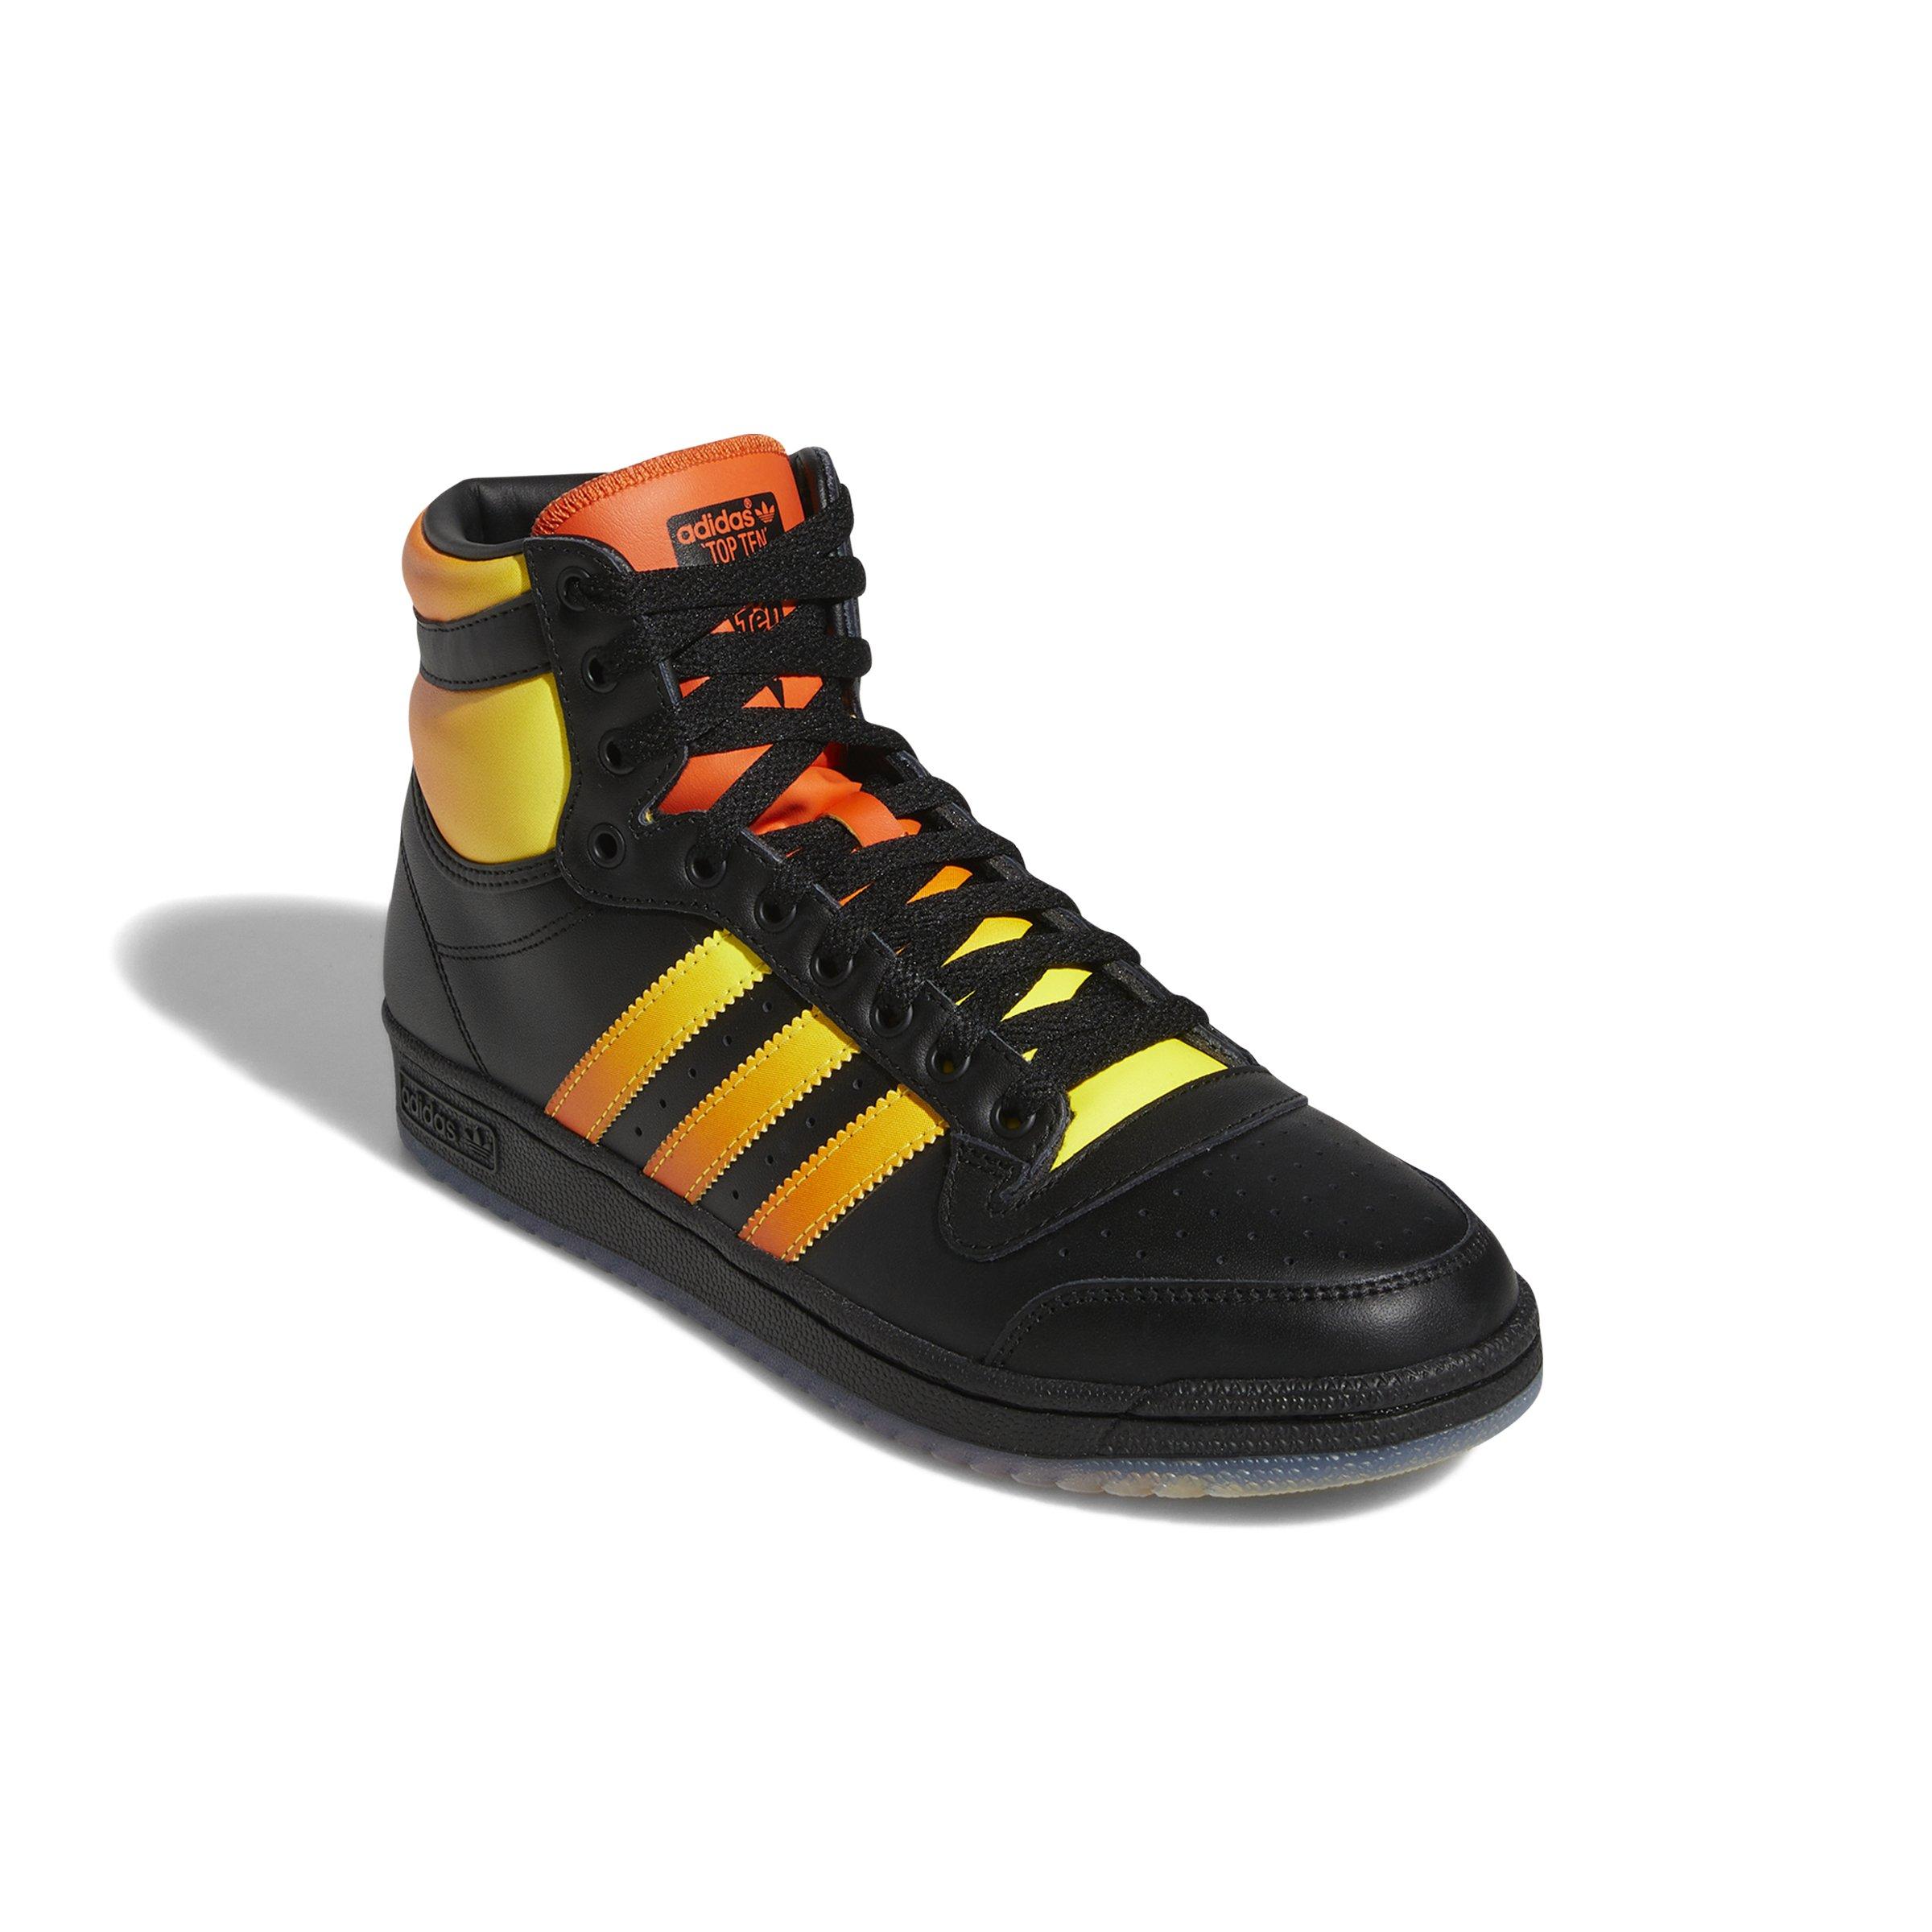 La forma Litoral nostalgia adidas Top Ten Hi "Black/Semi Orange" Men's Shoe